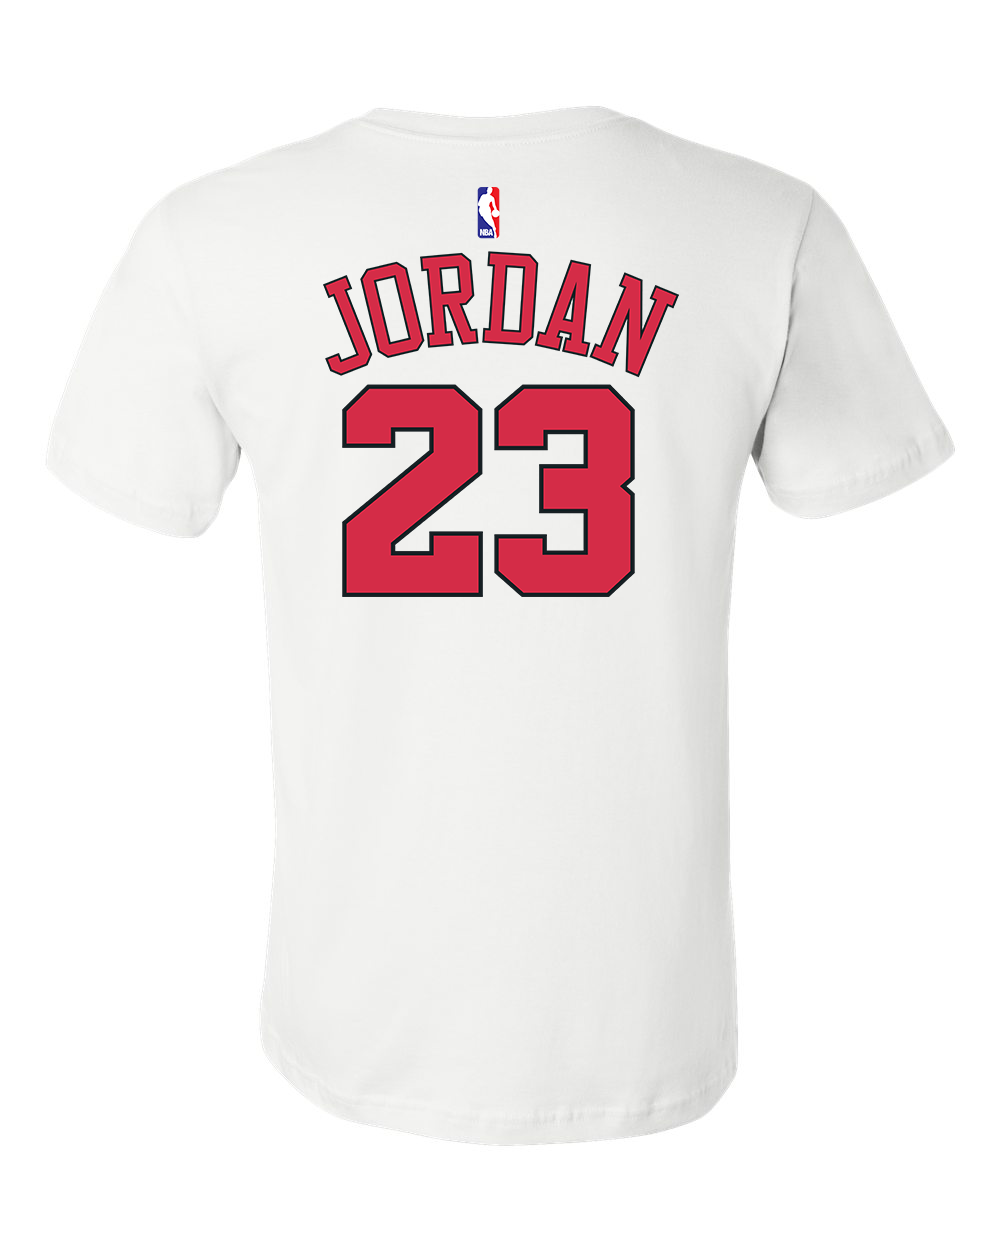 Michael Jordan Shirt, Chicago Bulls Short Sleeve Unisex T-shirt